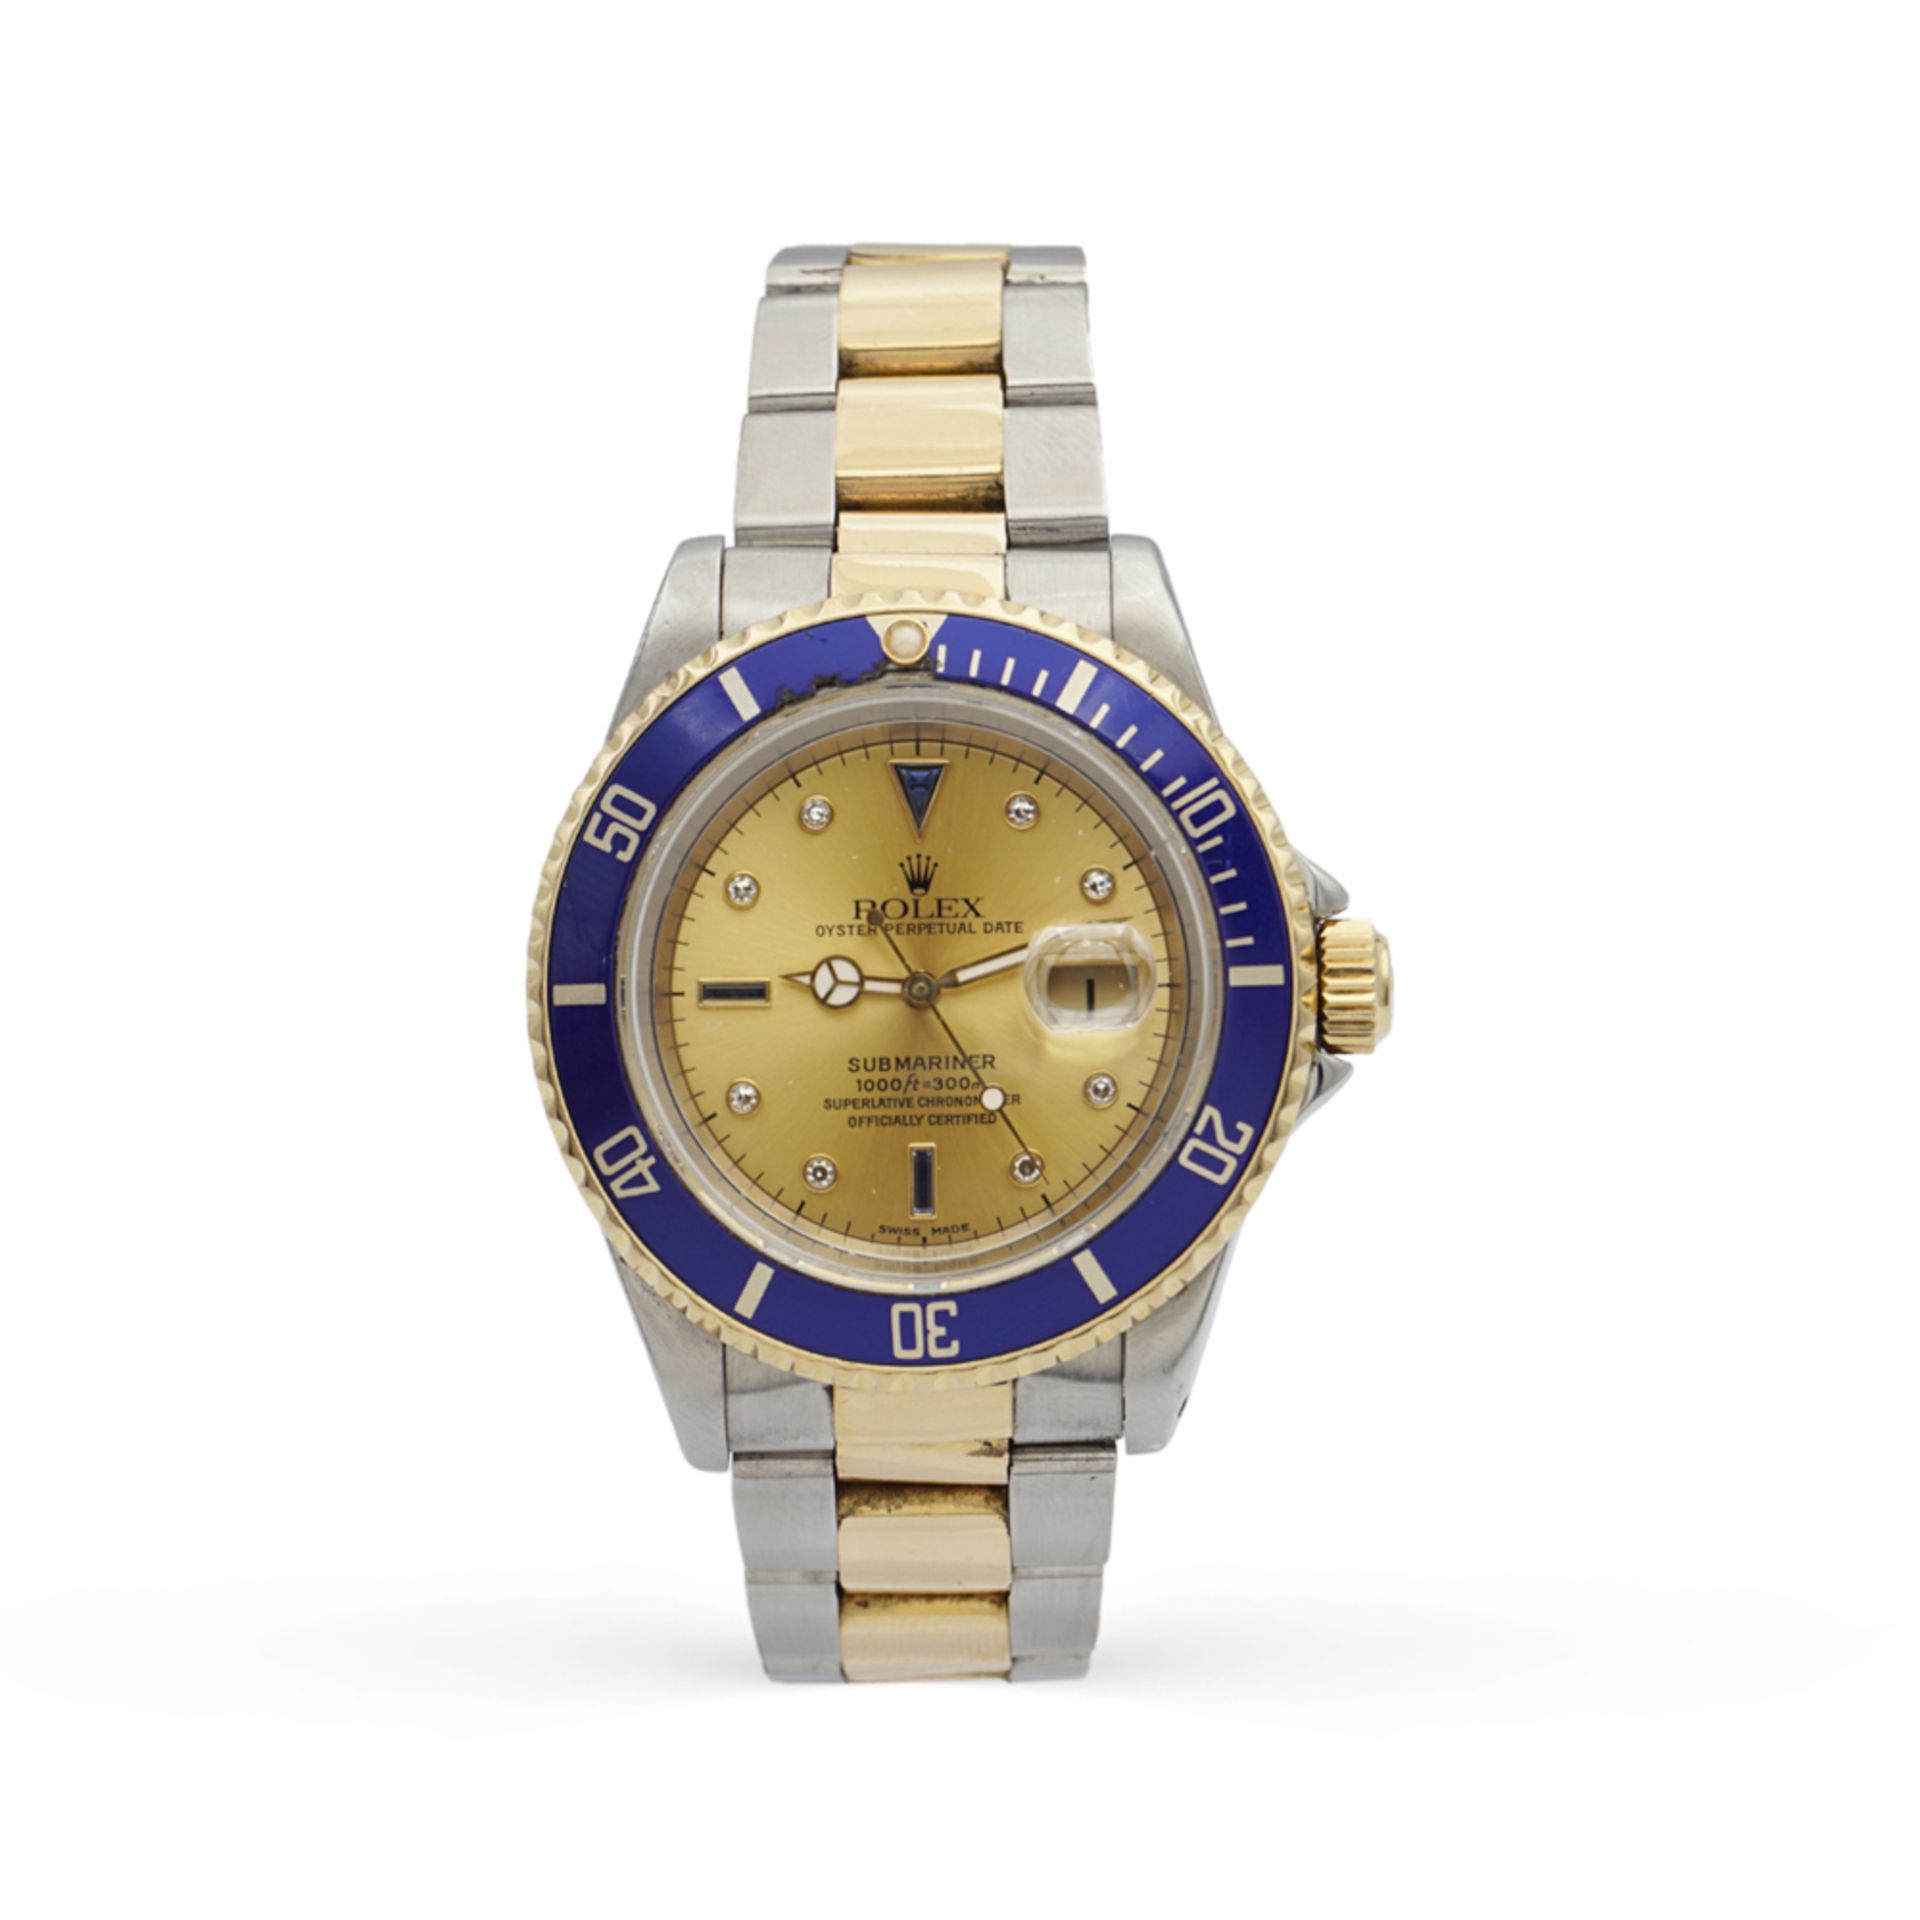 Rolex Submarine Sultan Oyster Perpetual Date, wrist watch 1990s